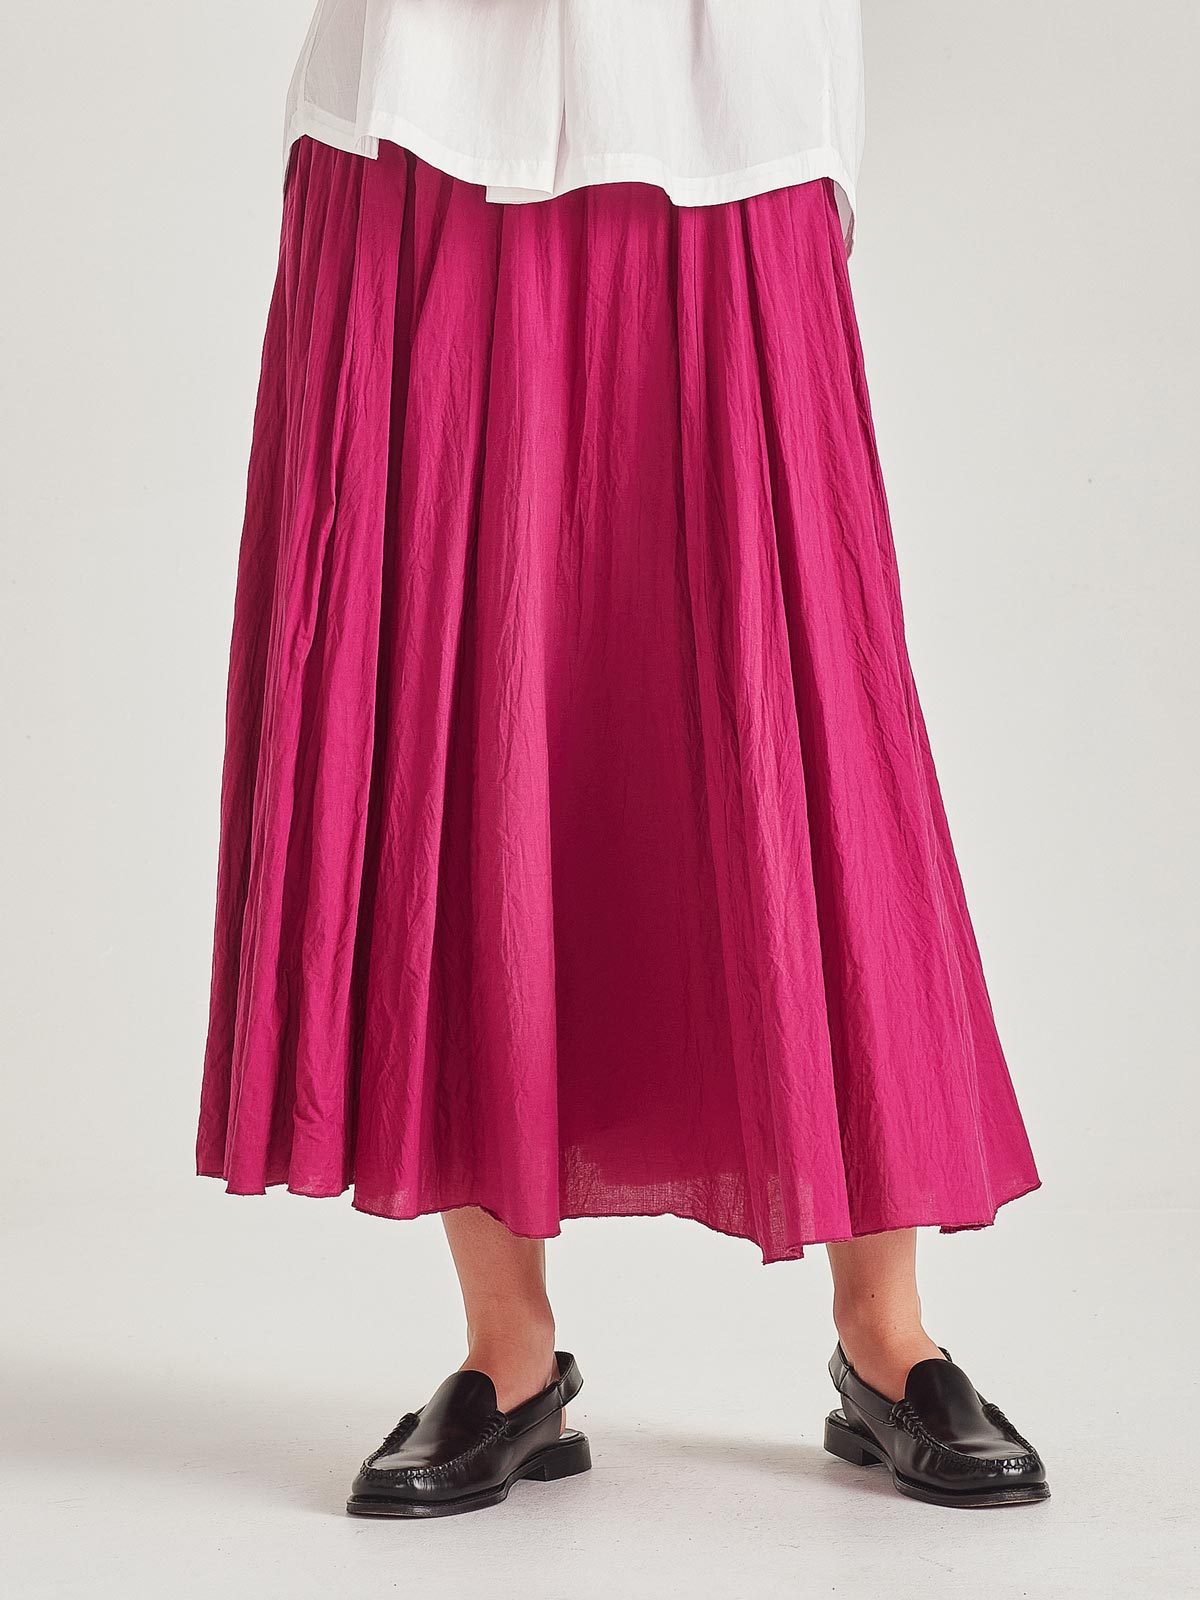 Fabiola Lawn Skirt